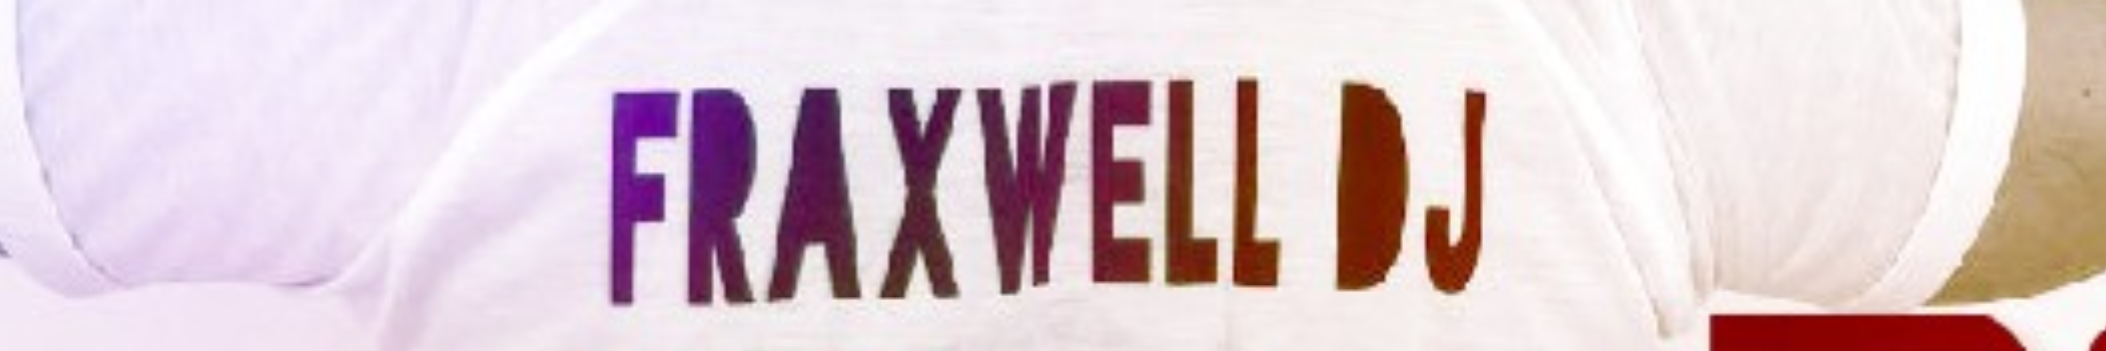 Fraxwell Dj